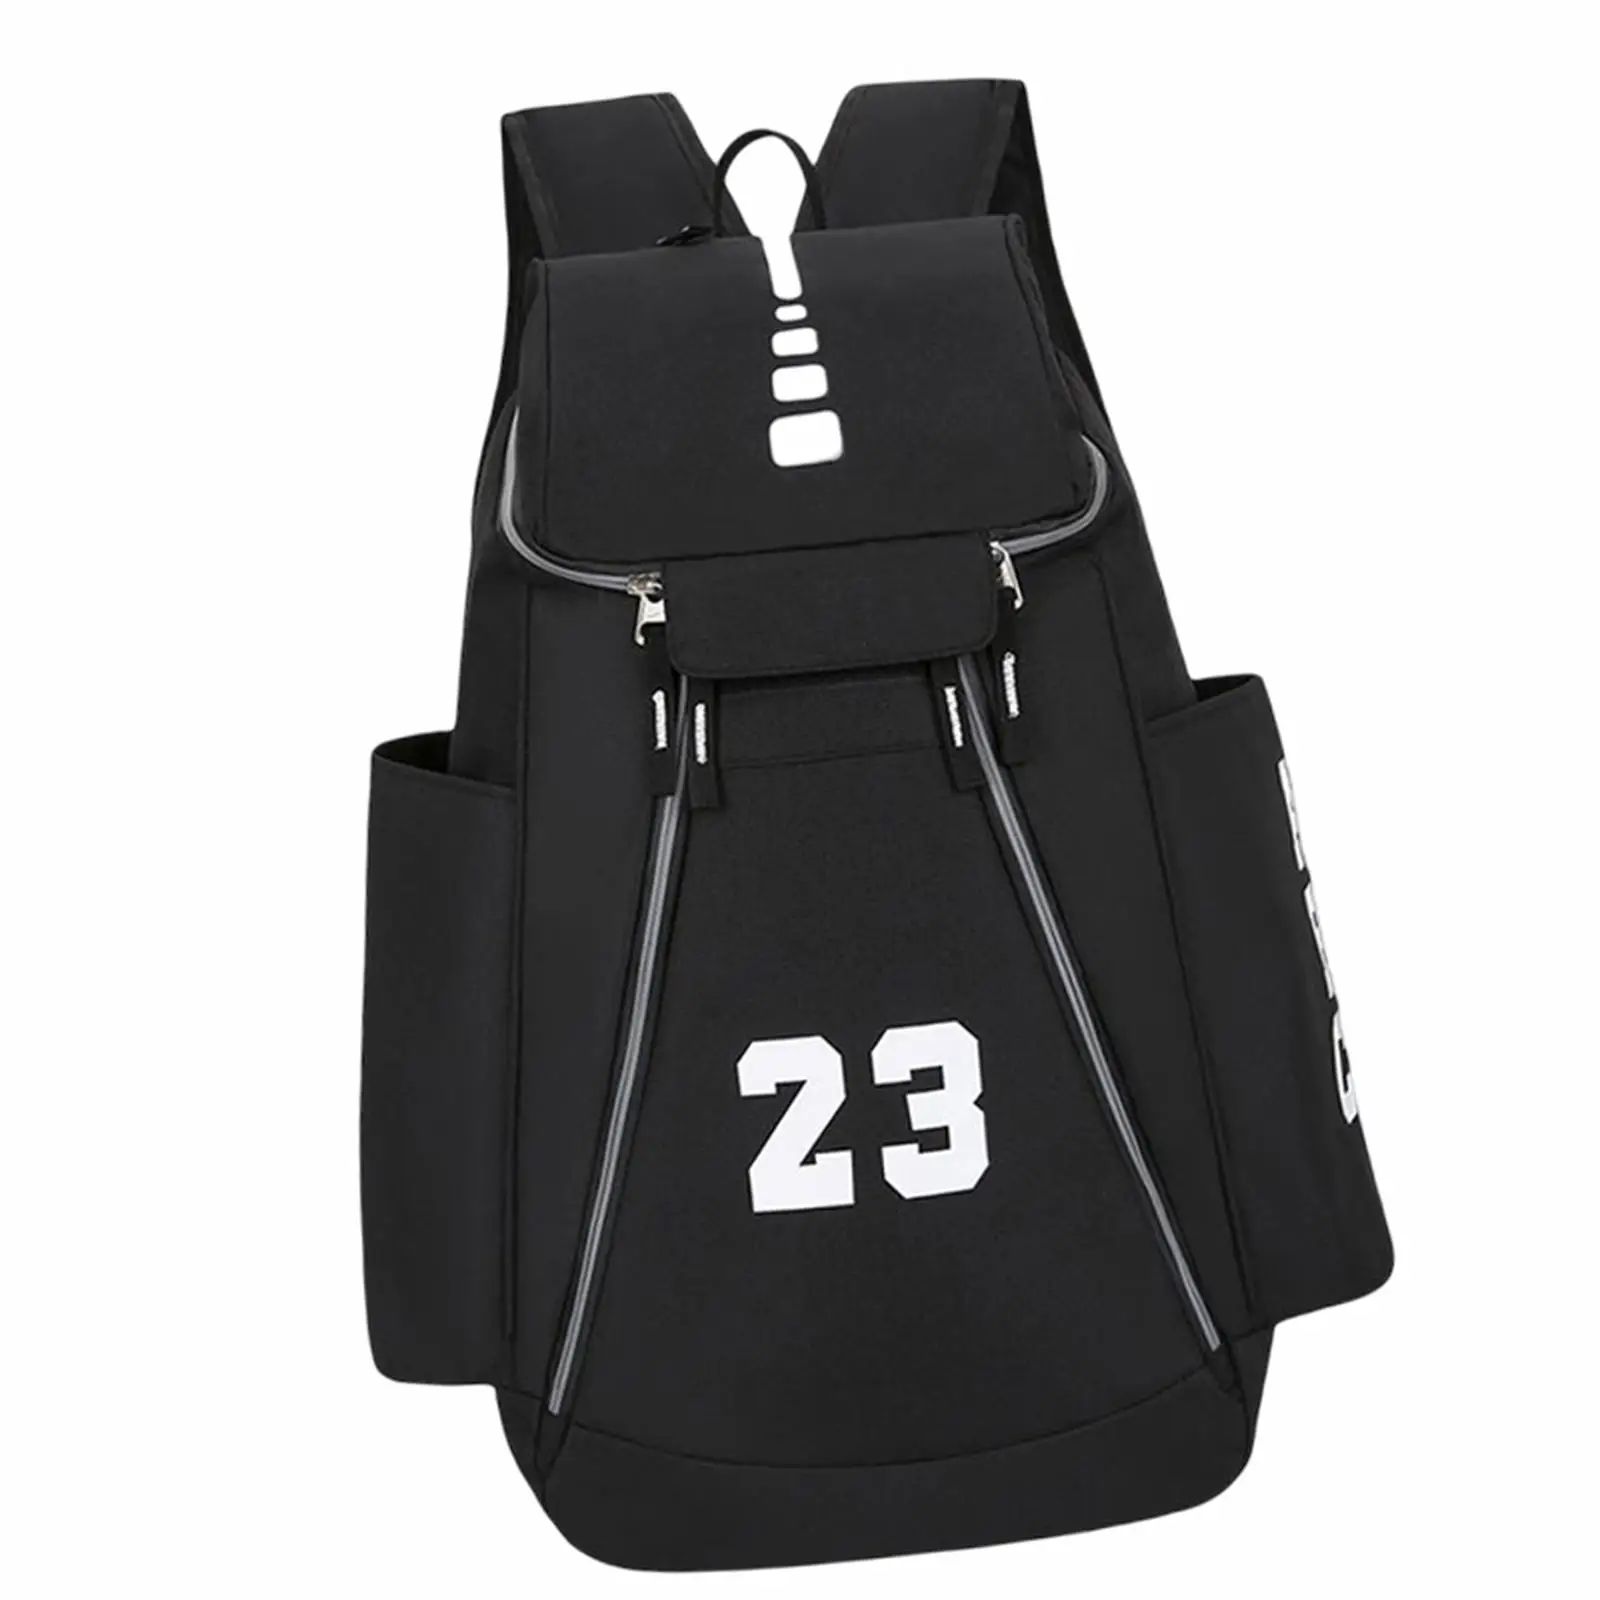 Waterproof Basketball Bag business Equipment Bag for Traveling Swimming Football